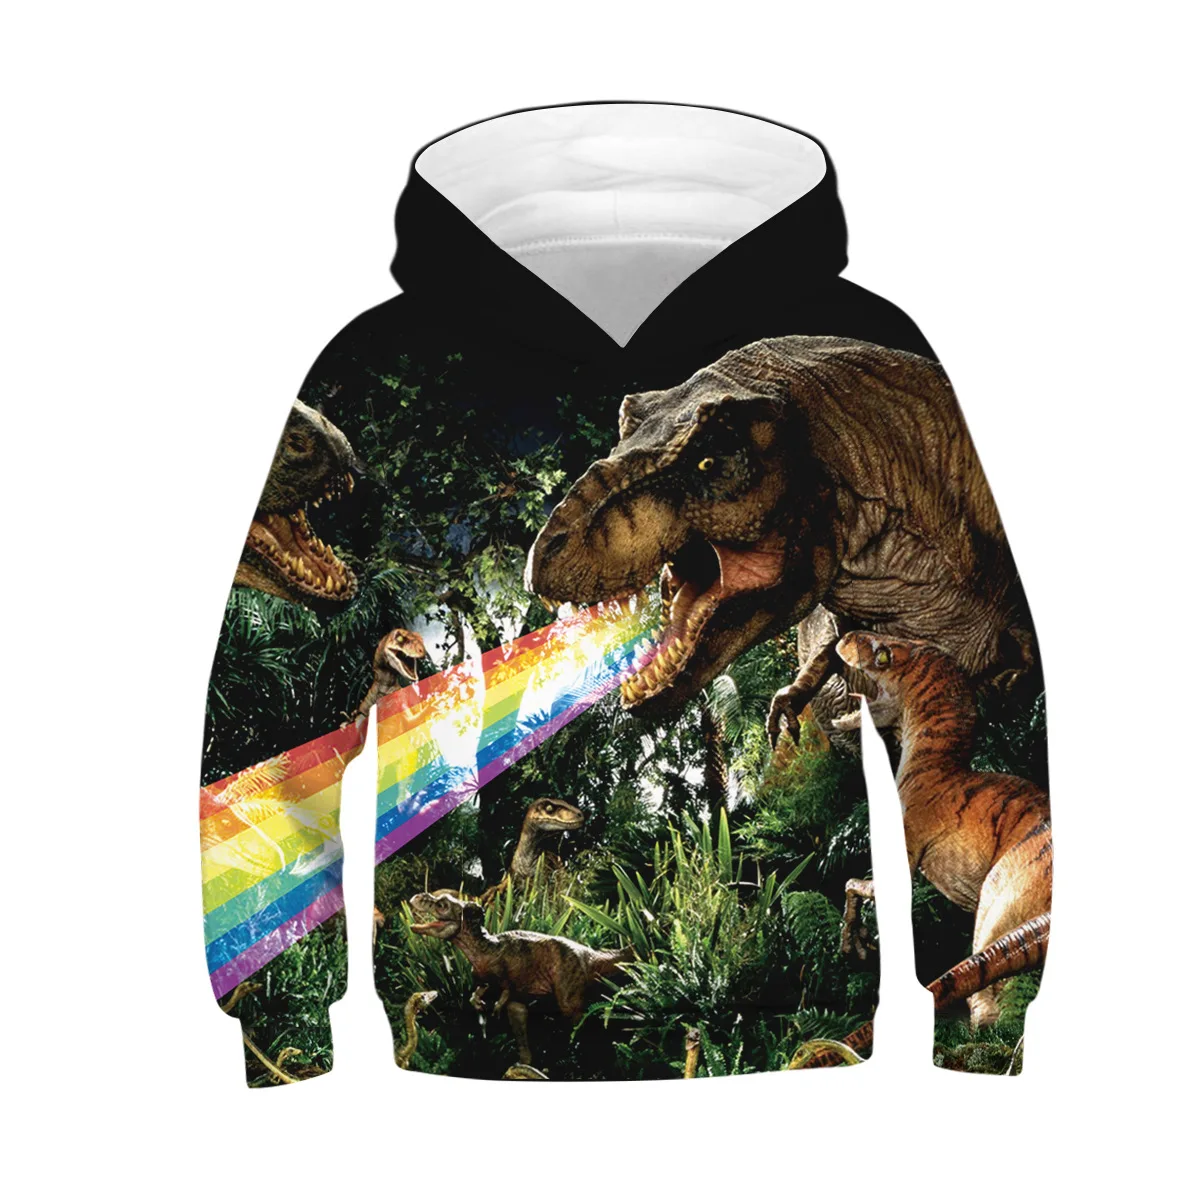  Big Size 3D Pattern Boys Sweatshirt Autumn Hooded Monkey Wolf Lion Unicorn Hoodies For Boys And Gir